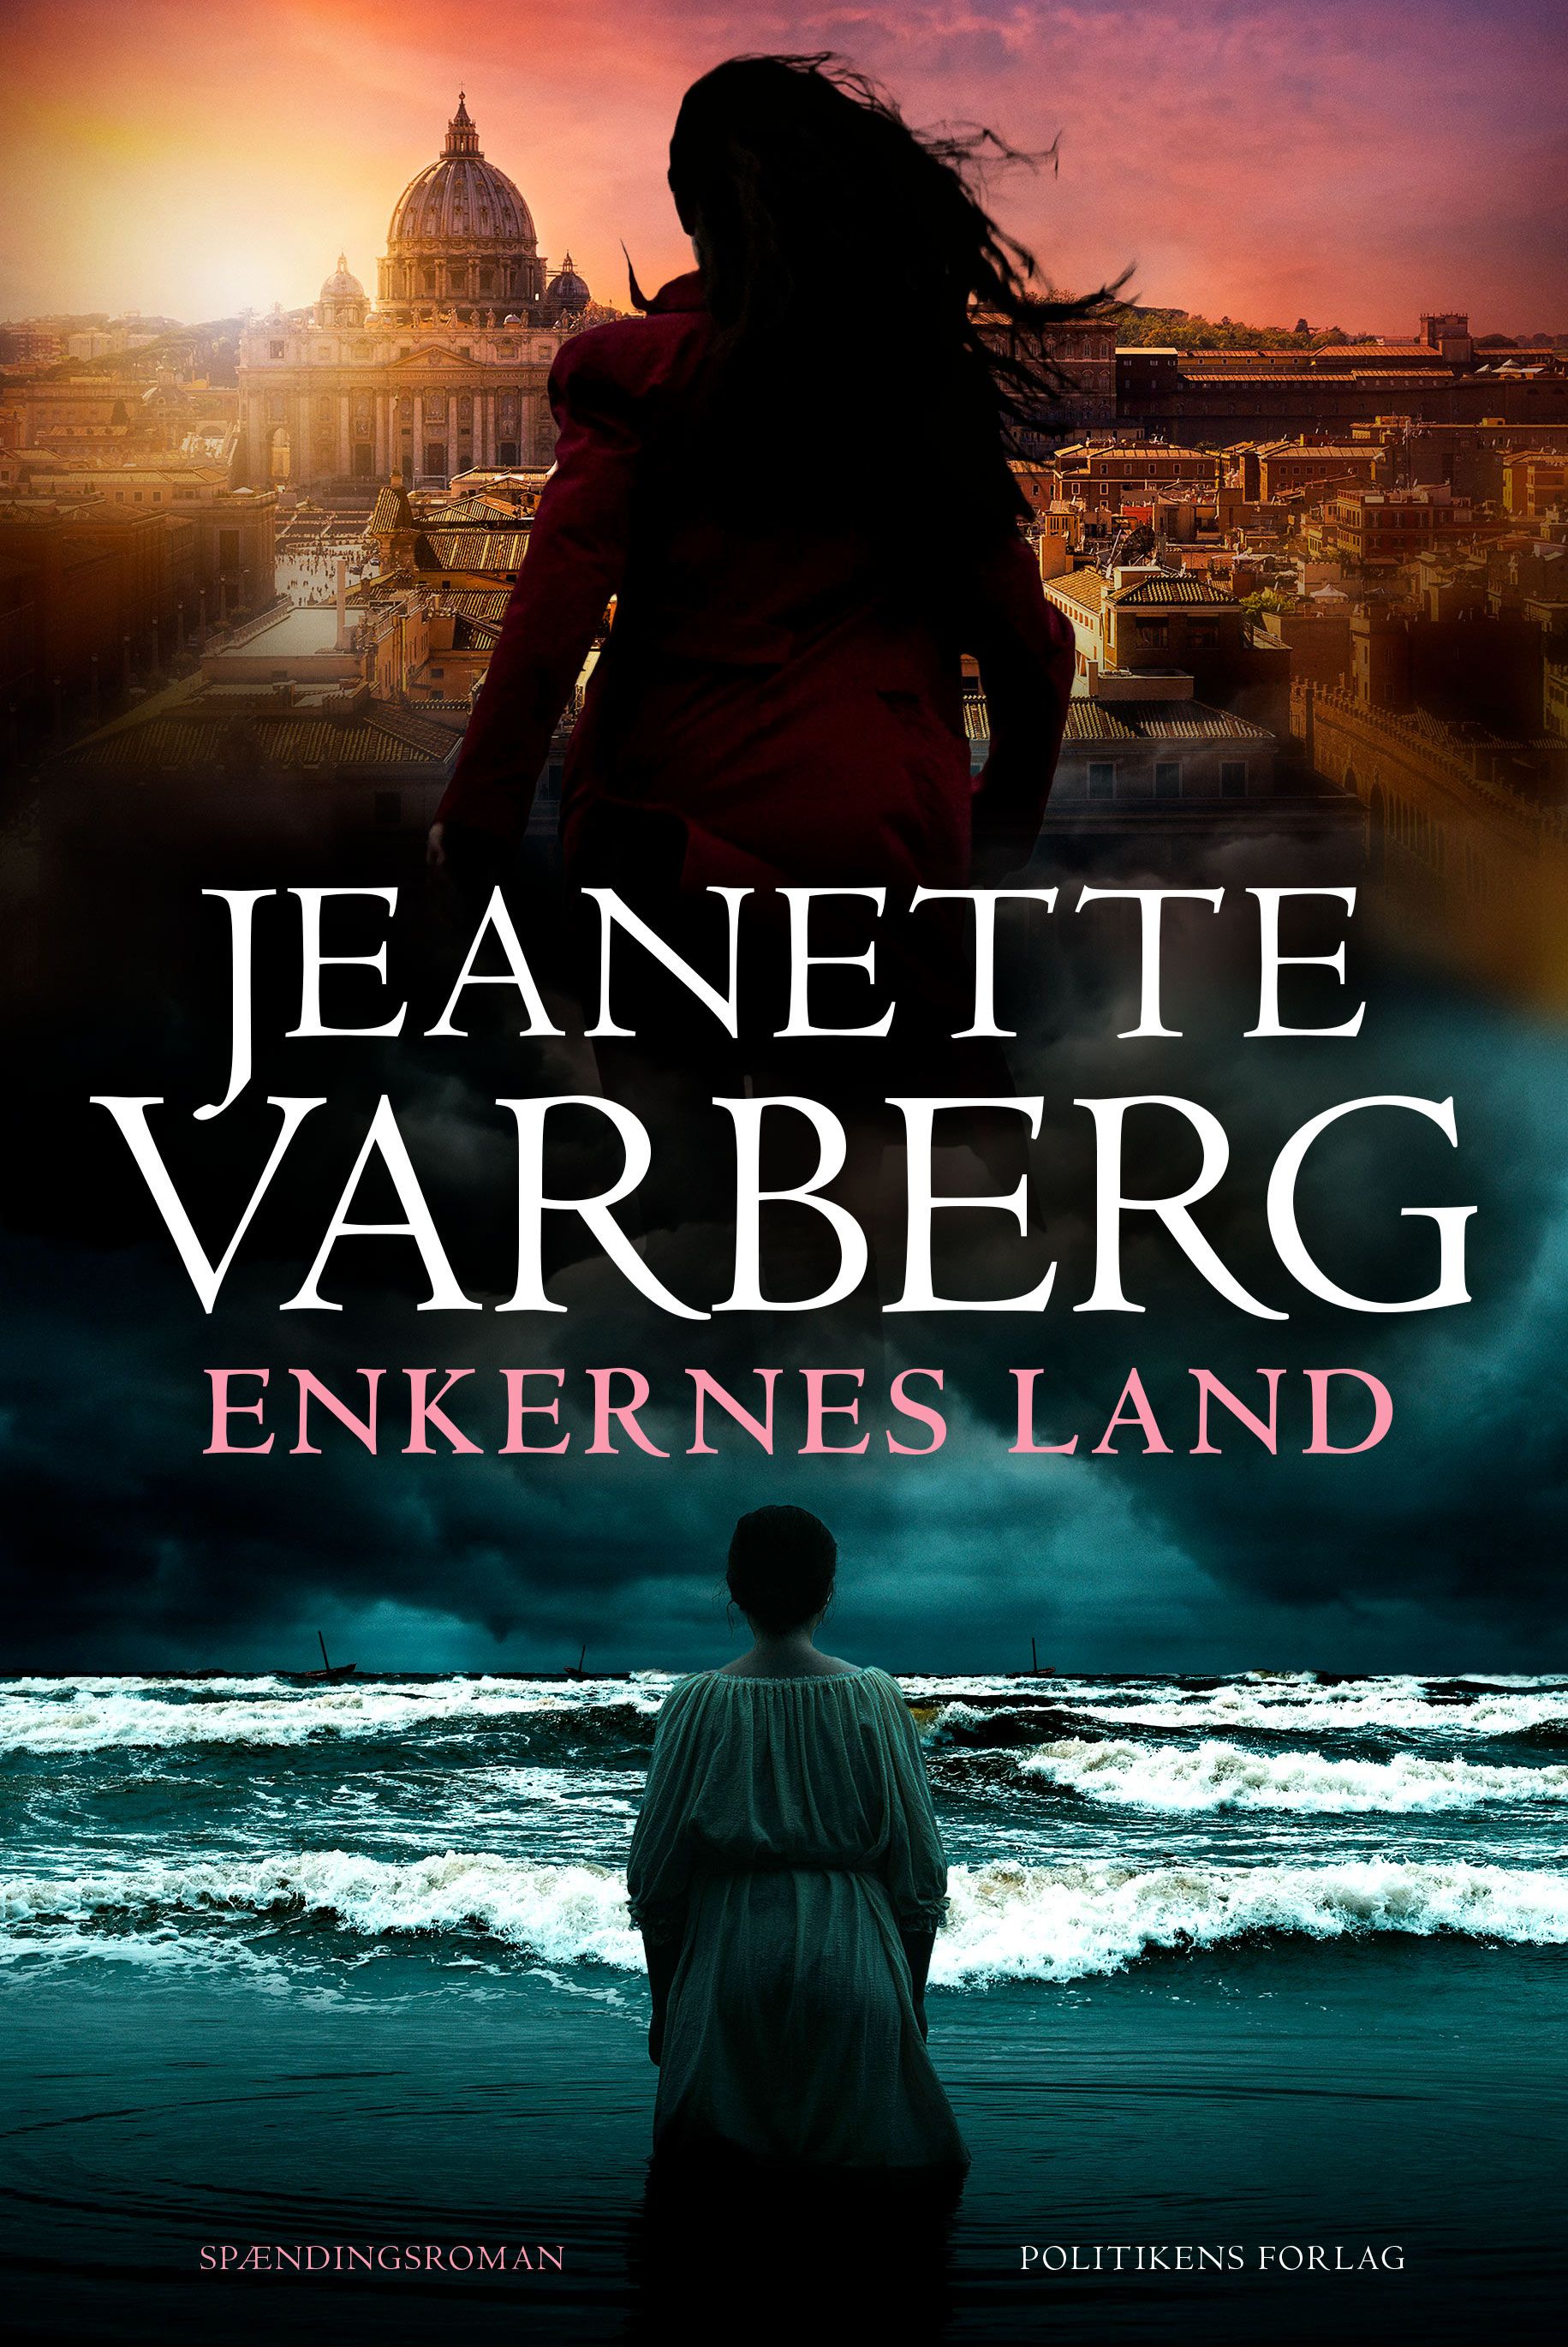 Enkernes land, eBook by Jeanette Varberg